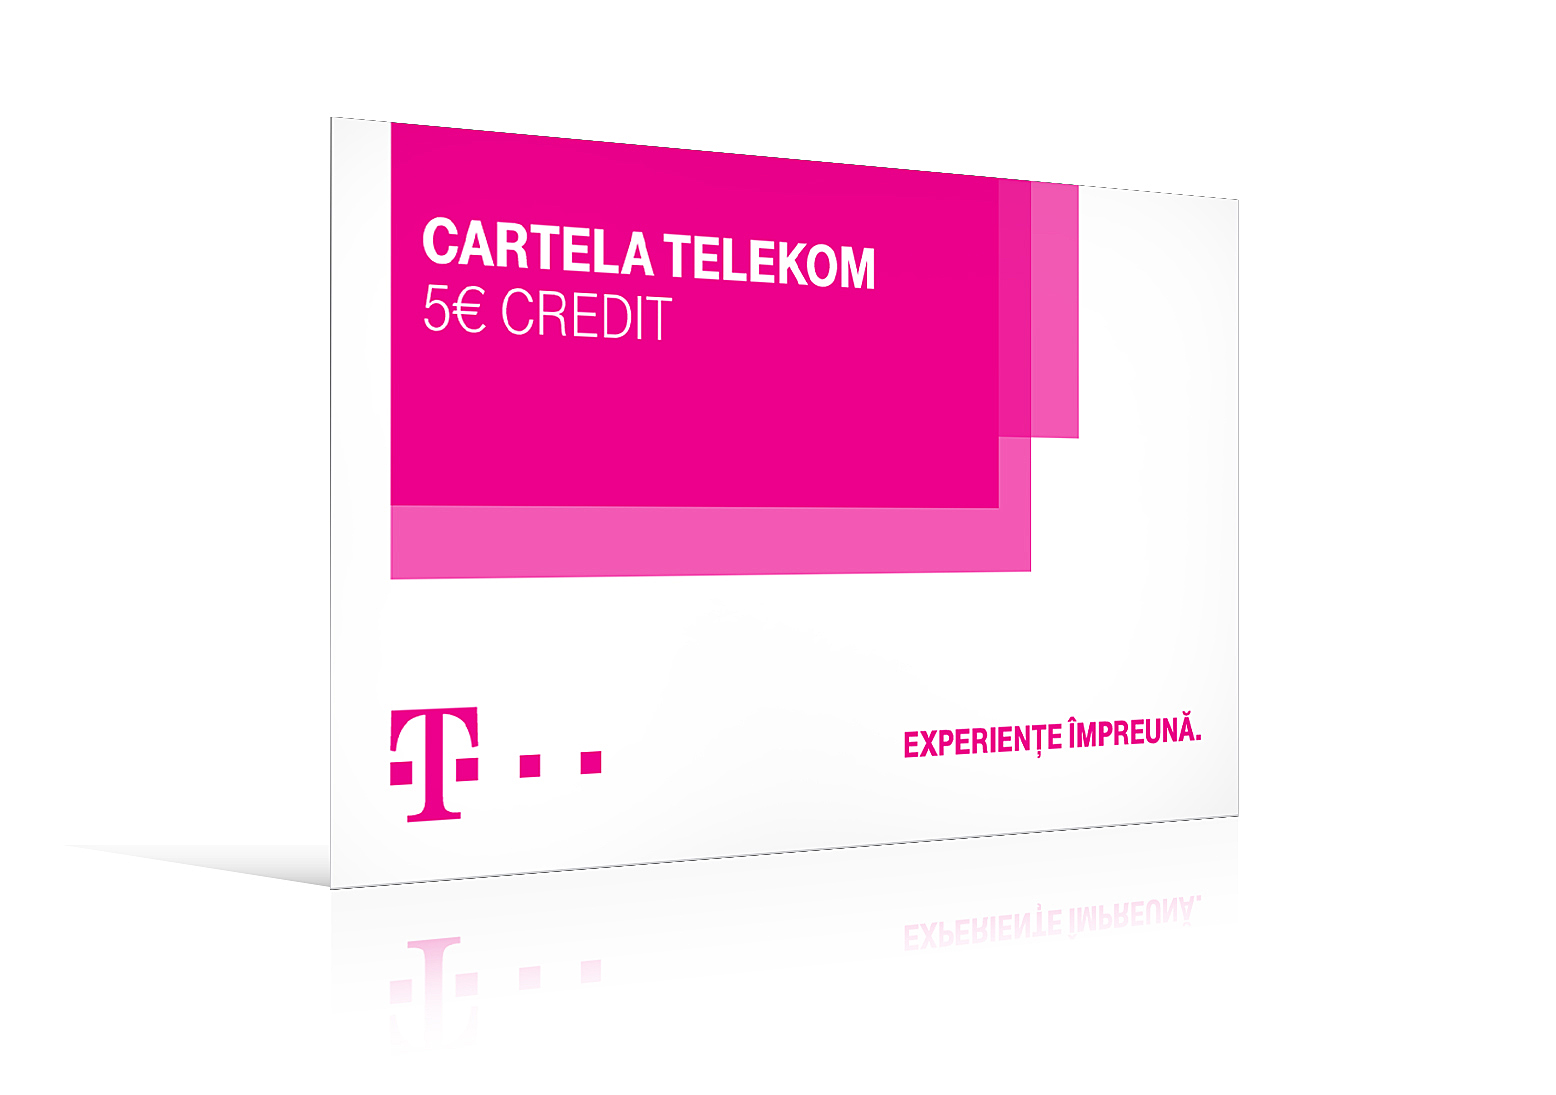 The beginning Orient together Cartela telefonica preplatita - Telekom